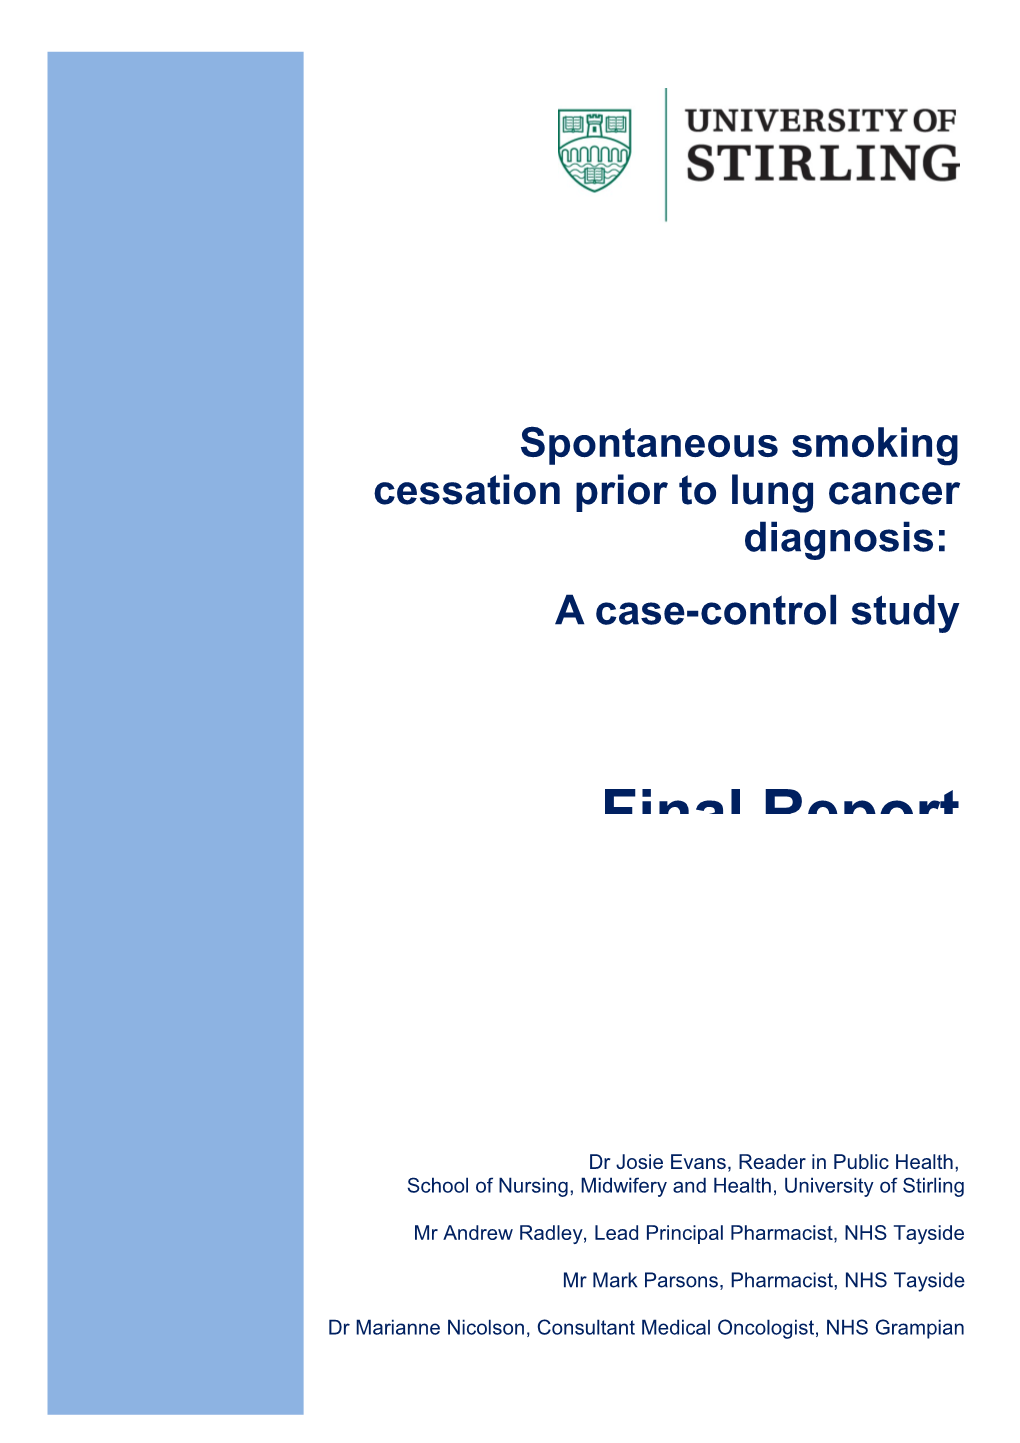 Spontaneous Smoking Cessation Prior to Lung Cancer Diagnosis: a Case-Control Study